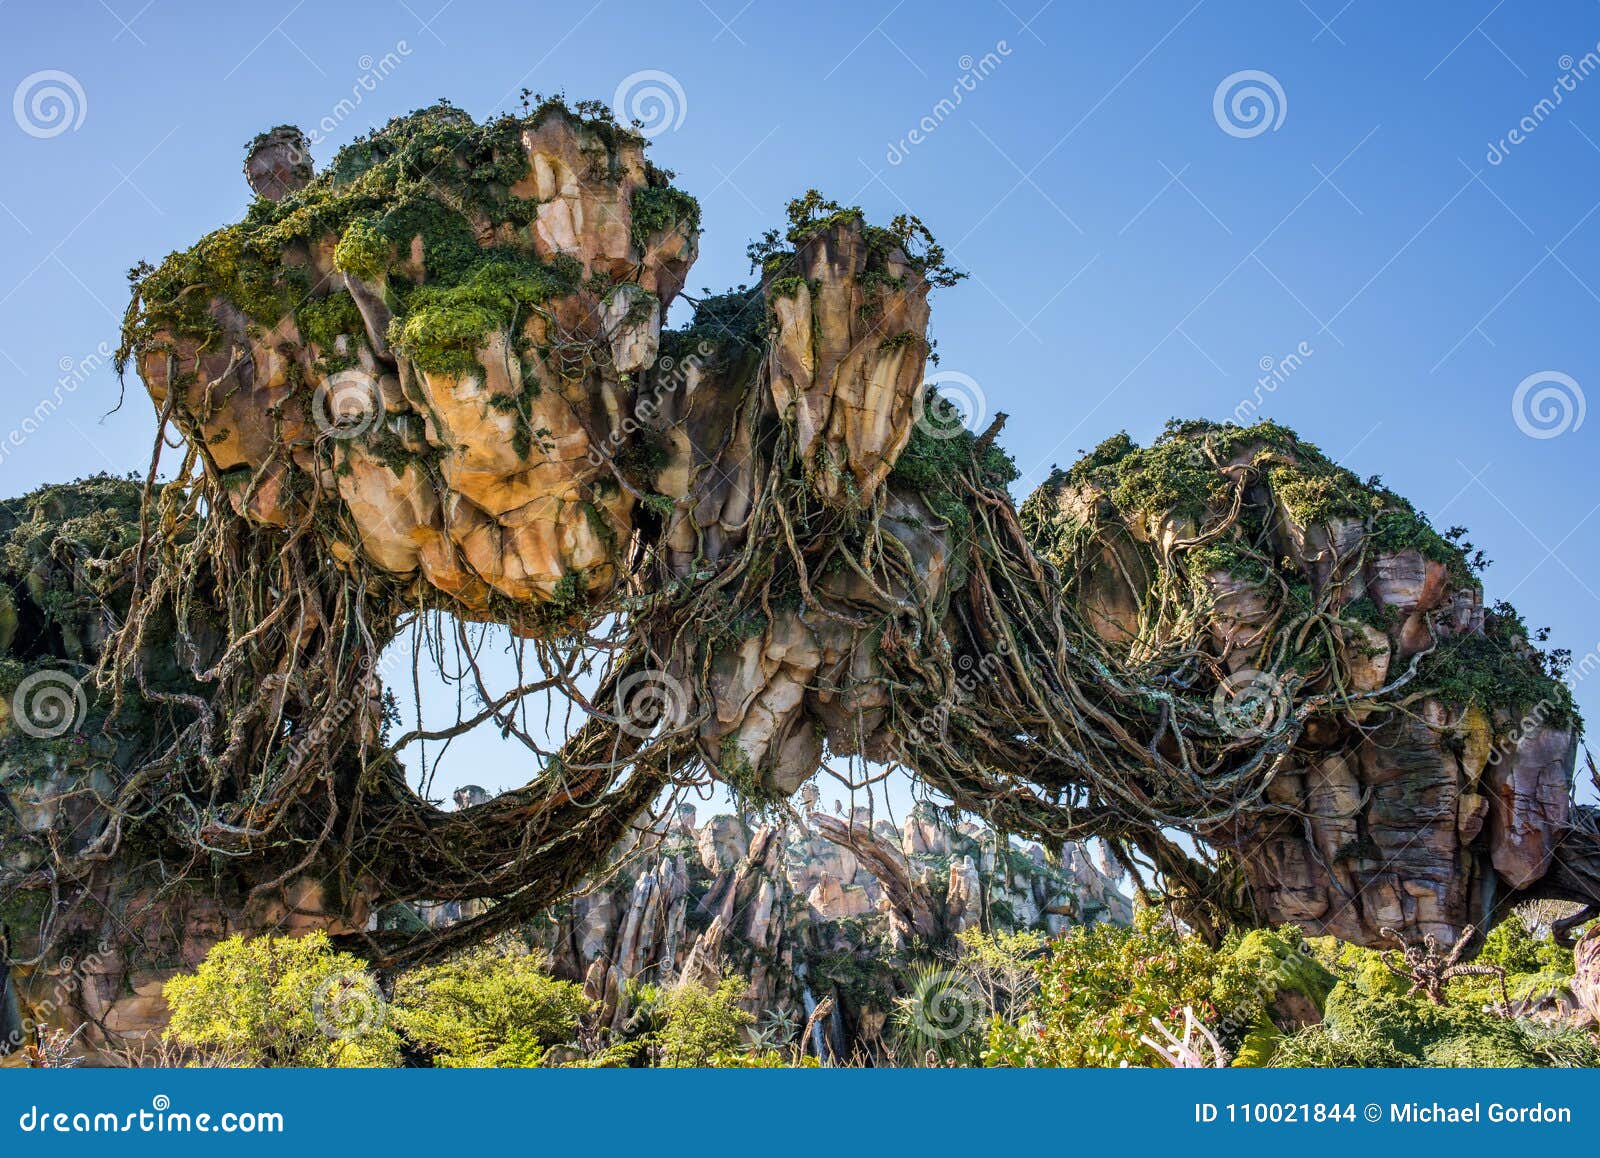 Pandora â€“ the World of Avatar at the Animal Kingdom at Walt Disney World  Editorial Stock Image - Image of magic, florida: 110021844